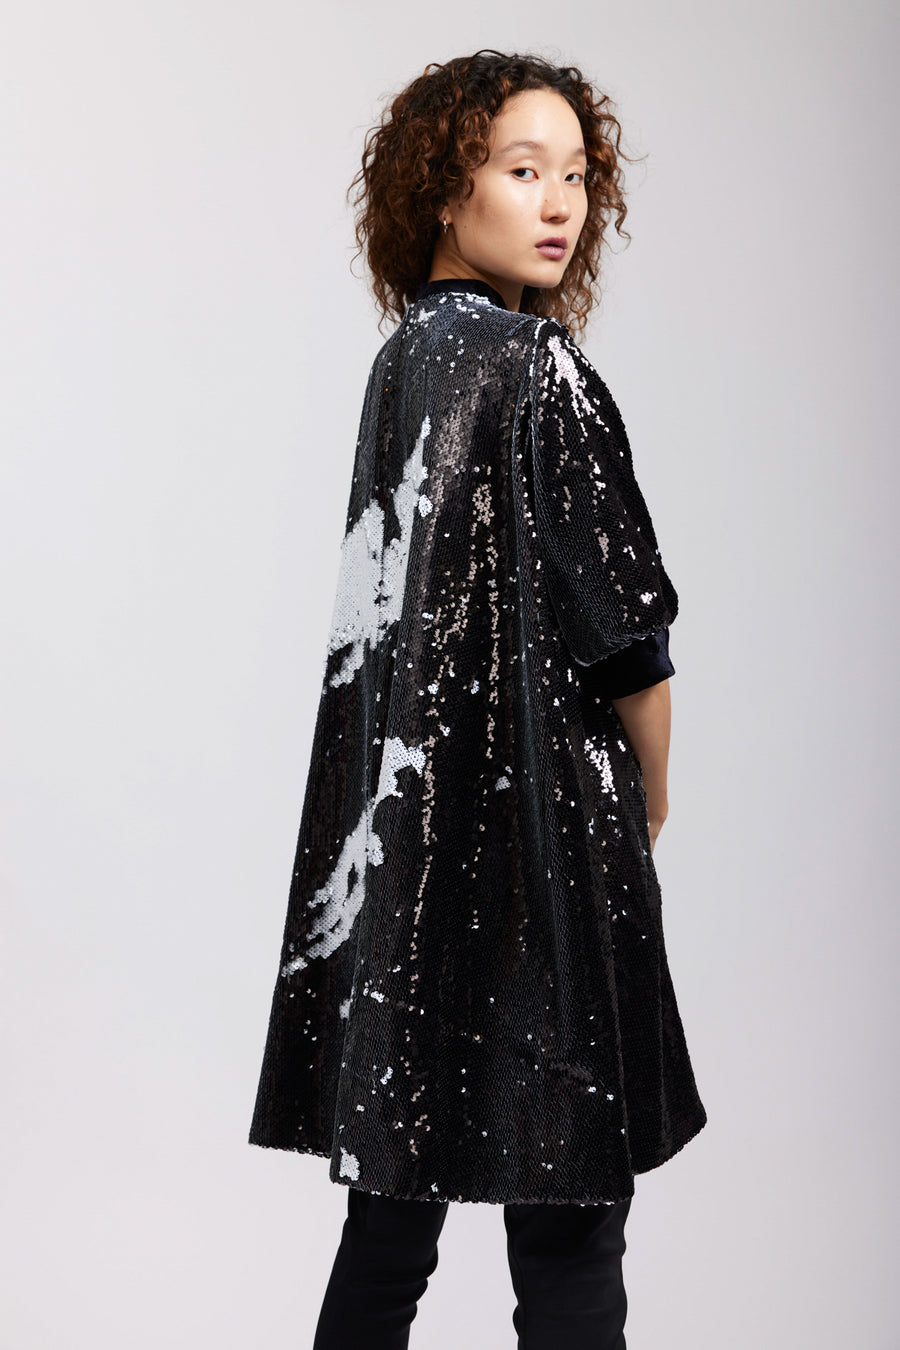 BATSHEVA - Beray Coat Dress in Black and White Flip Sequin